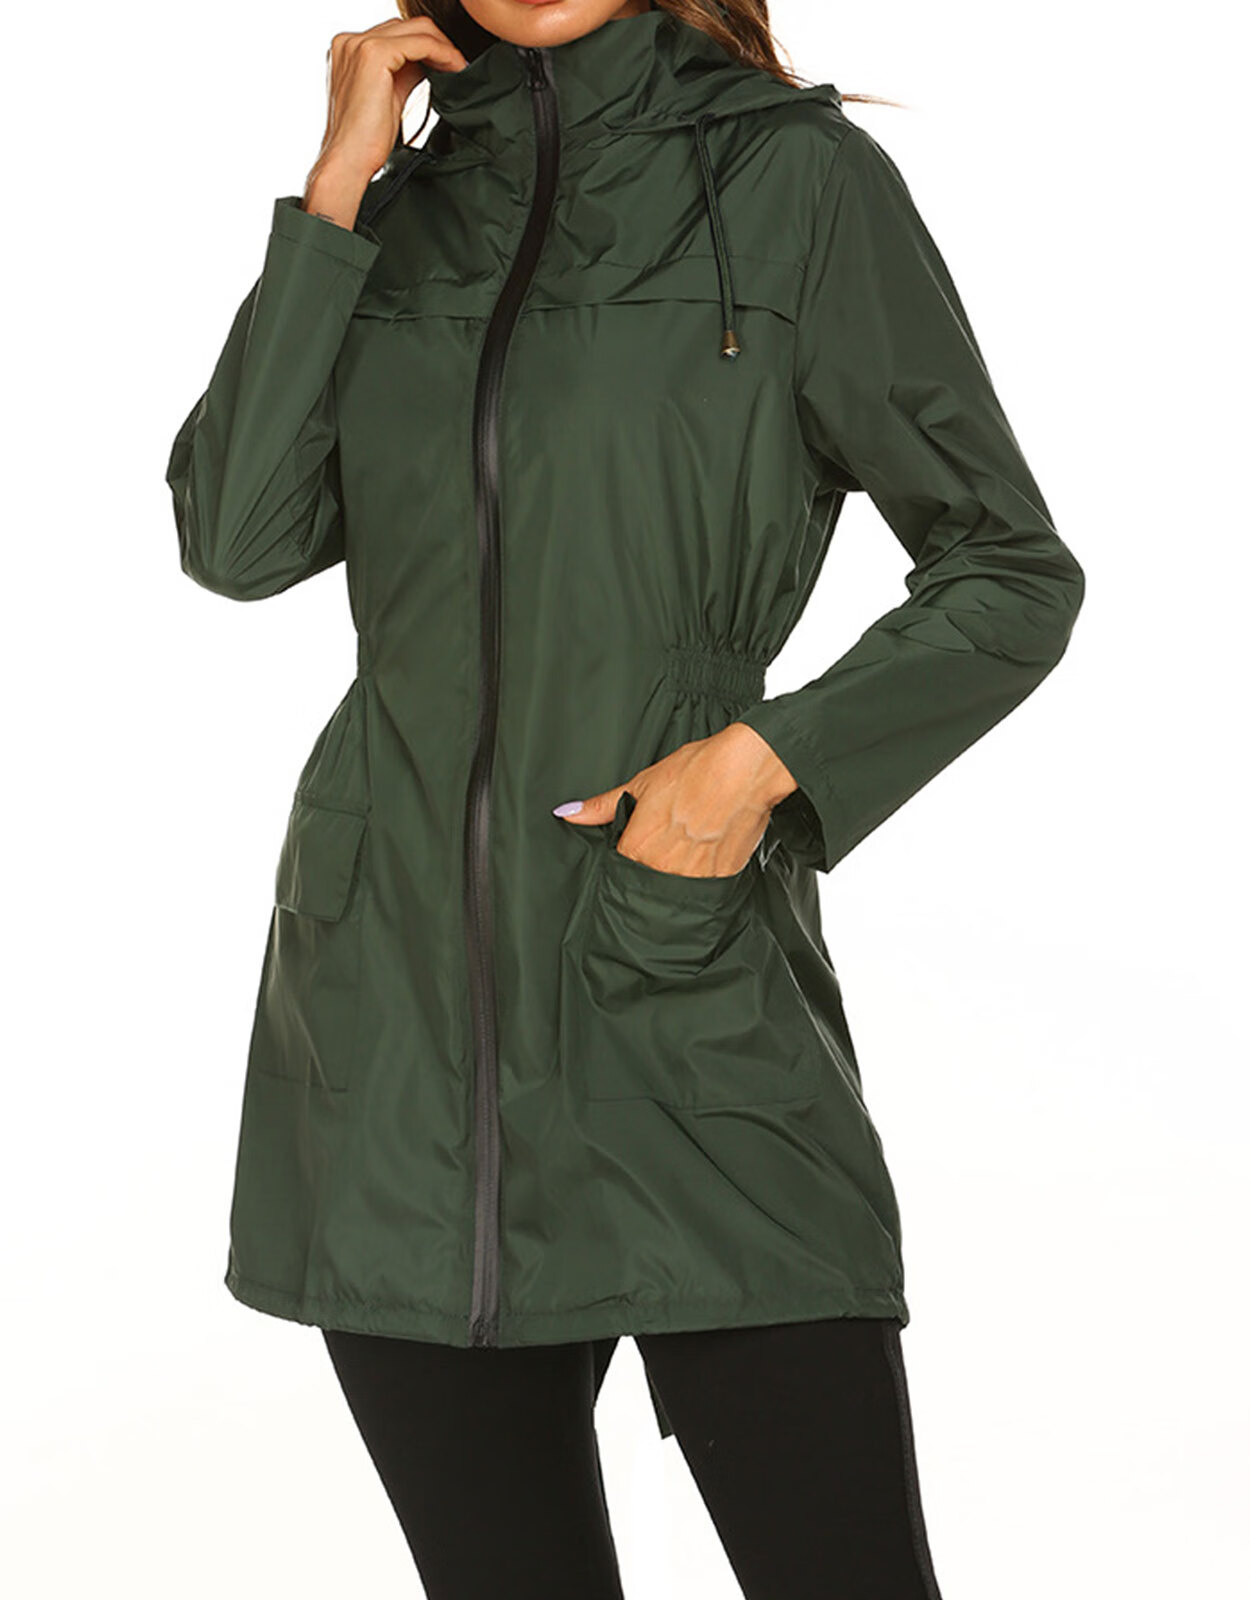 Rain Jackets for Women Waterproof Raincoats Lightweight Drawstrng Hooded Rain Jackets Windbreaker Outdoor Active Rainwear Jacket Alsol Lamesa - image 2 of 6